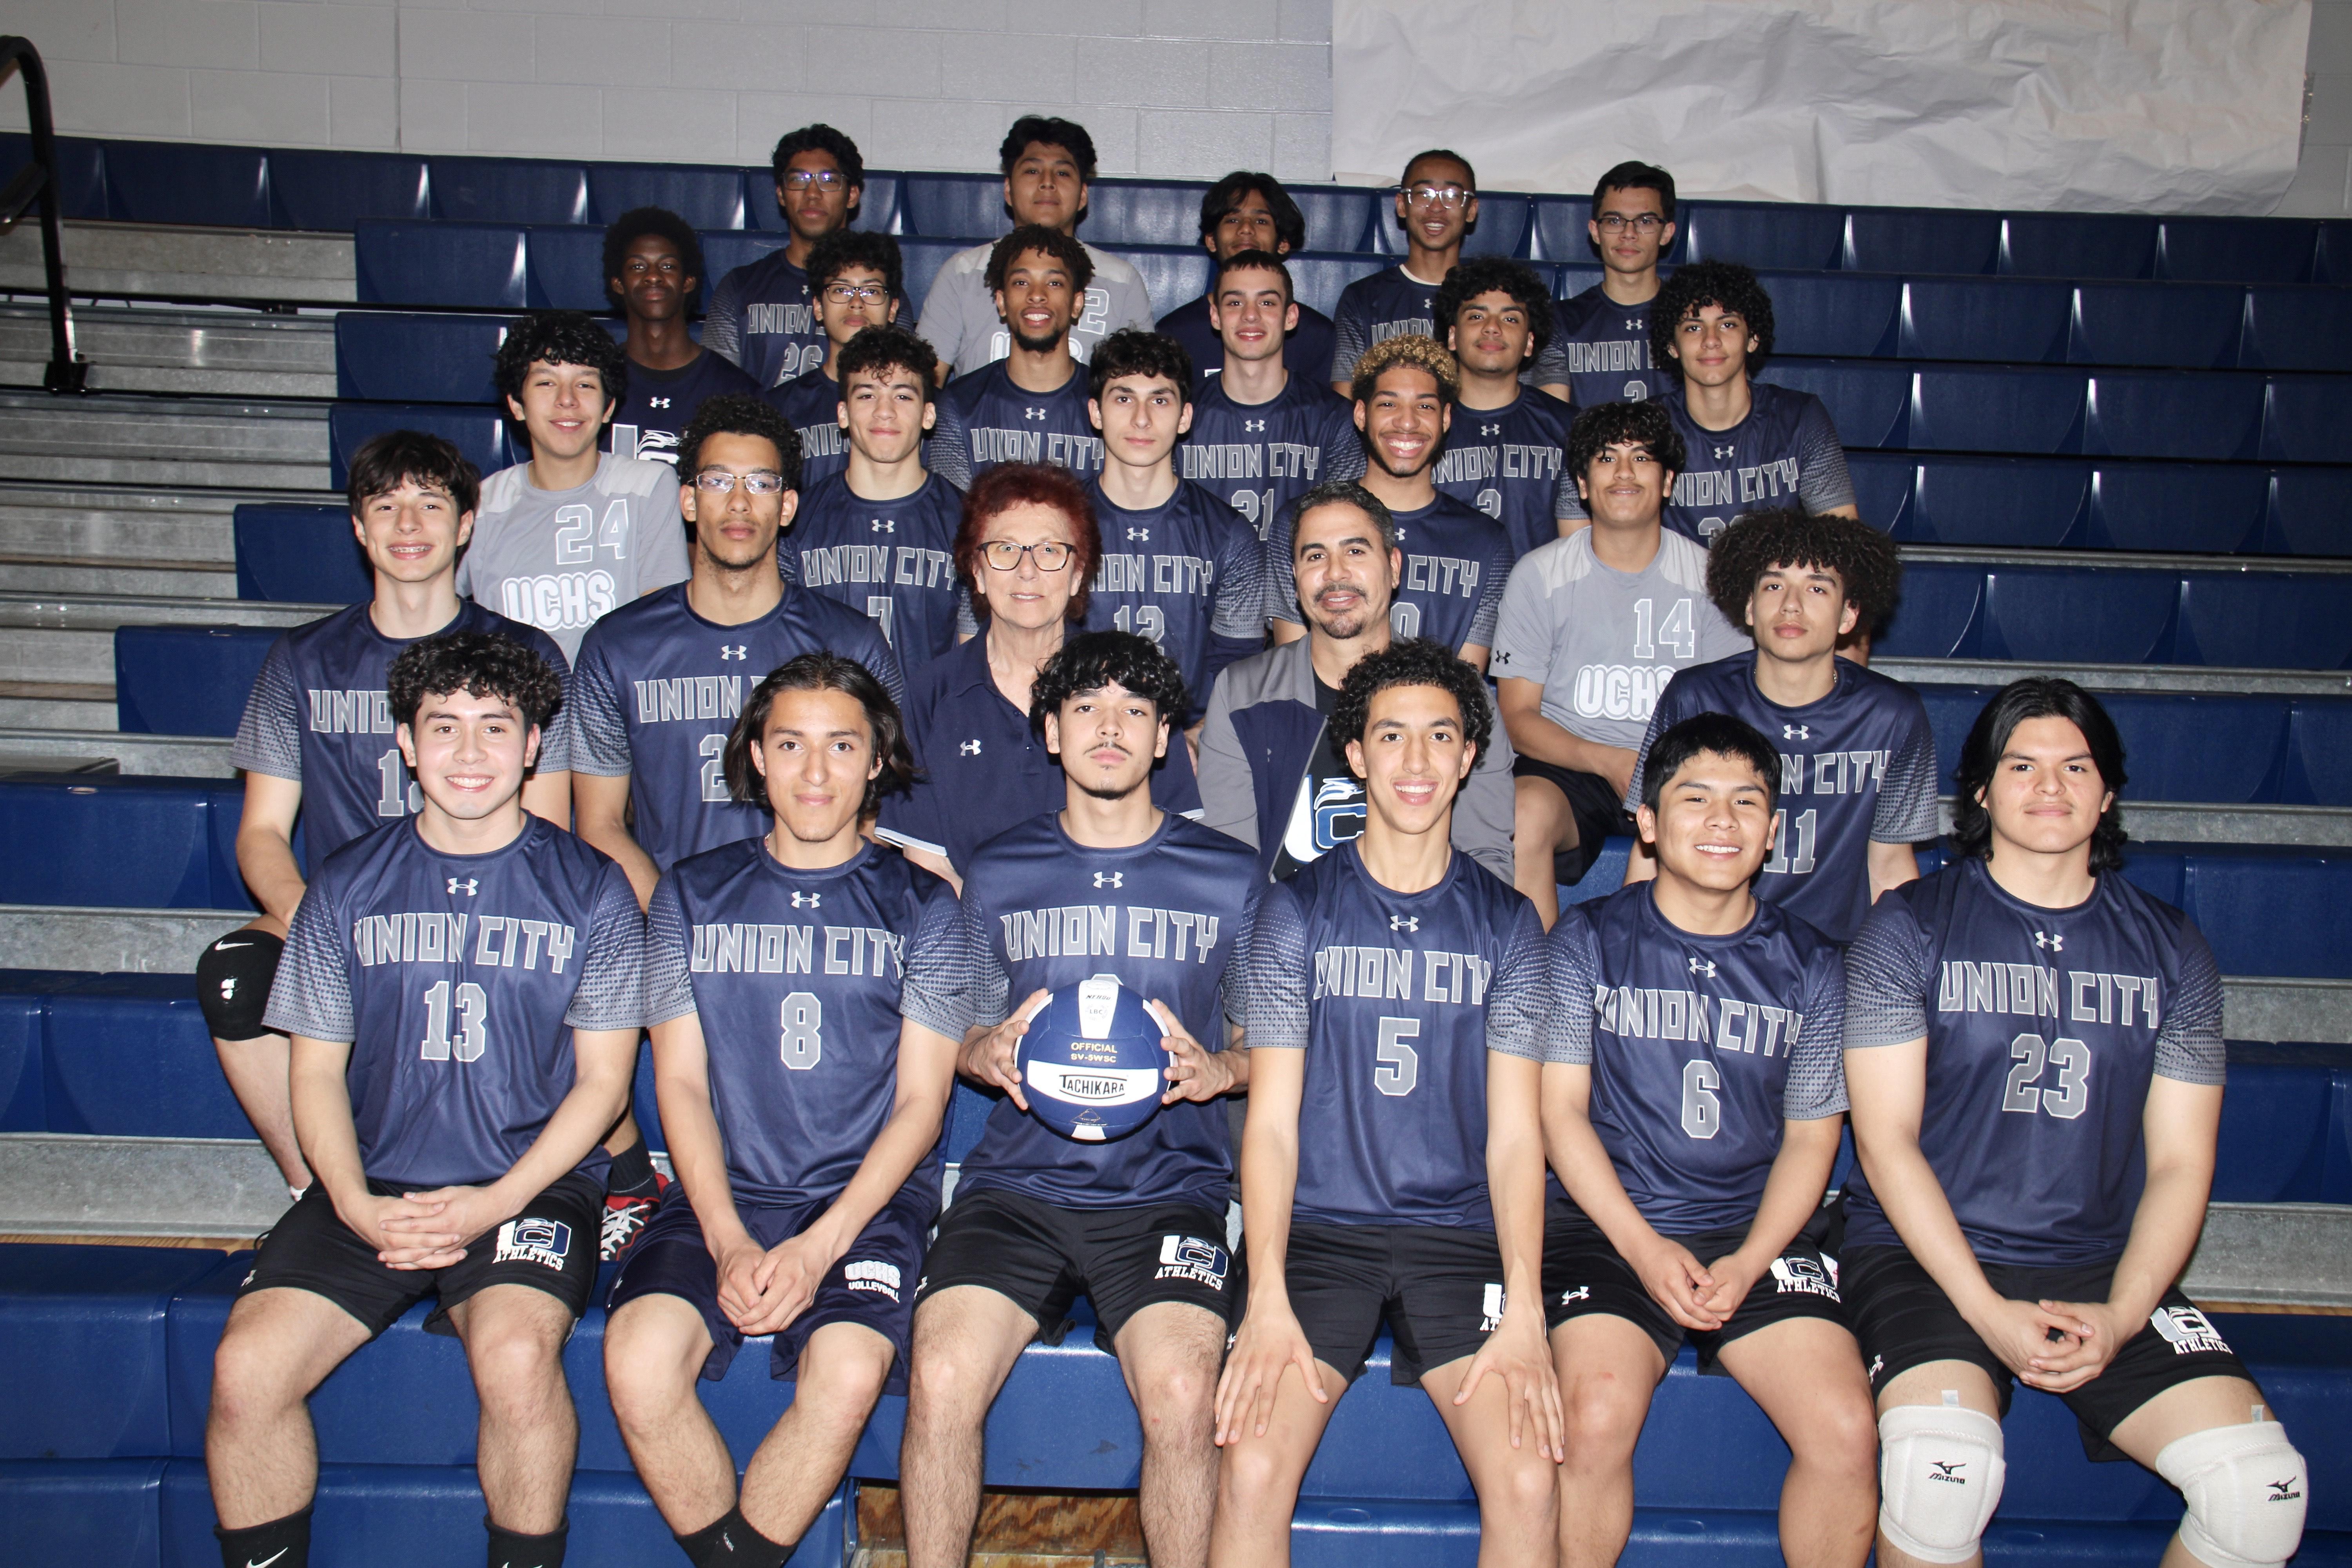 Congratulations to the Union City High School Boys' Volleyball Team for earning the 2023 USMC/AVCA Team Academic Award